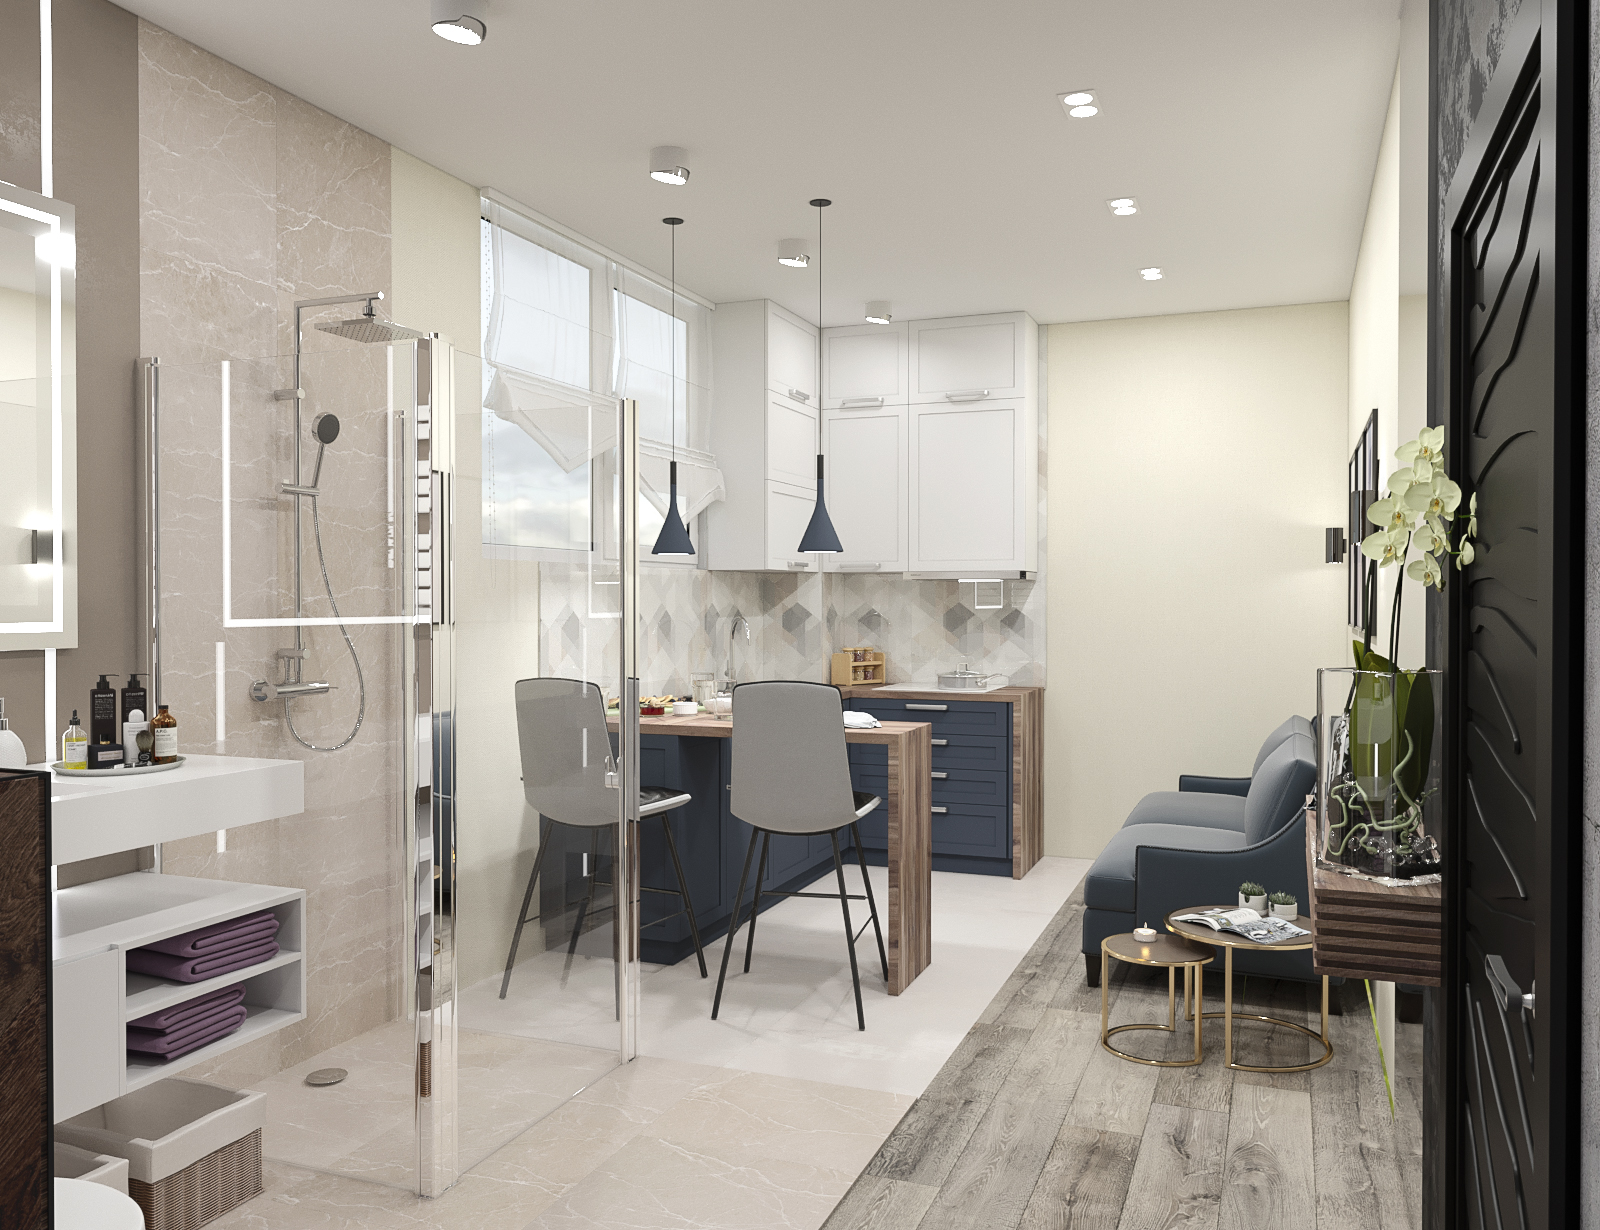 Showroom construction company in 3d max corona render image